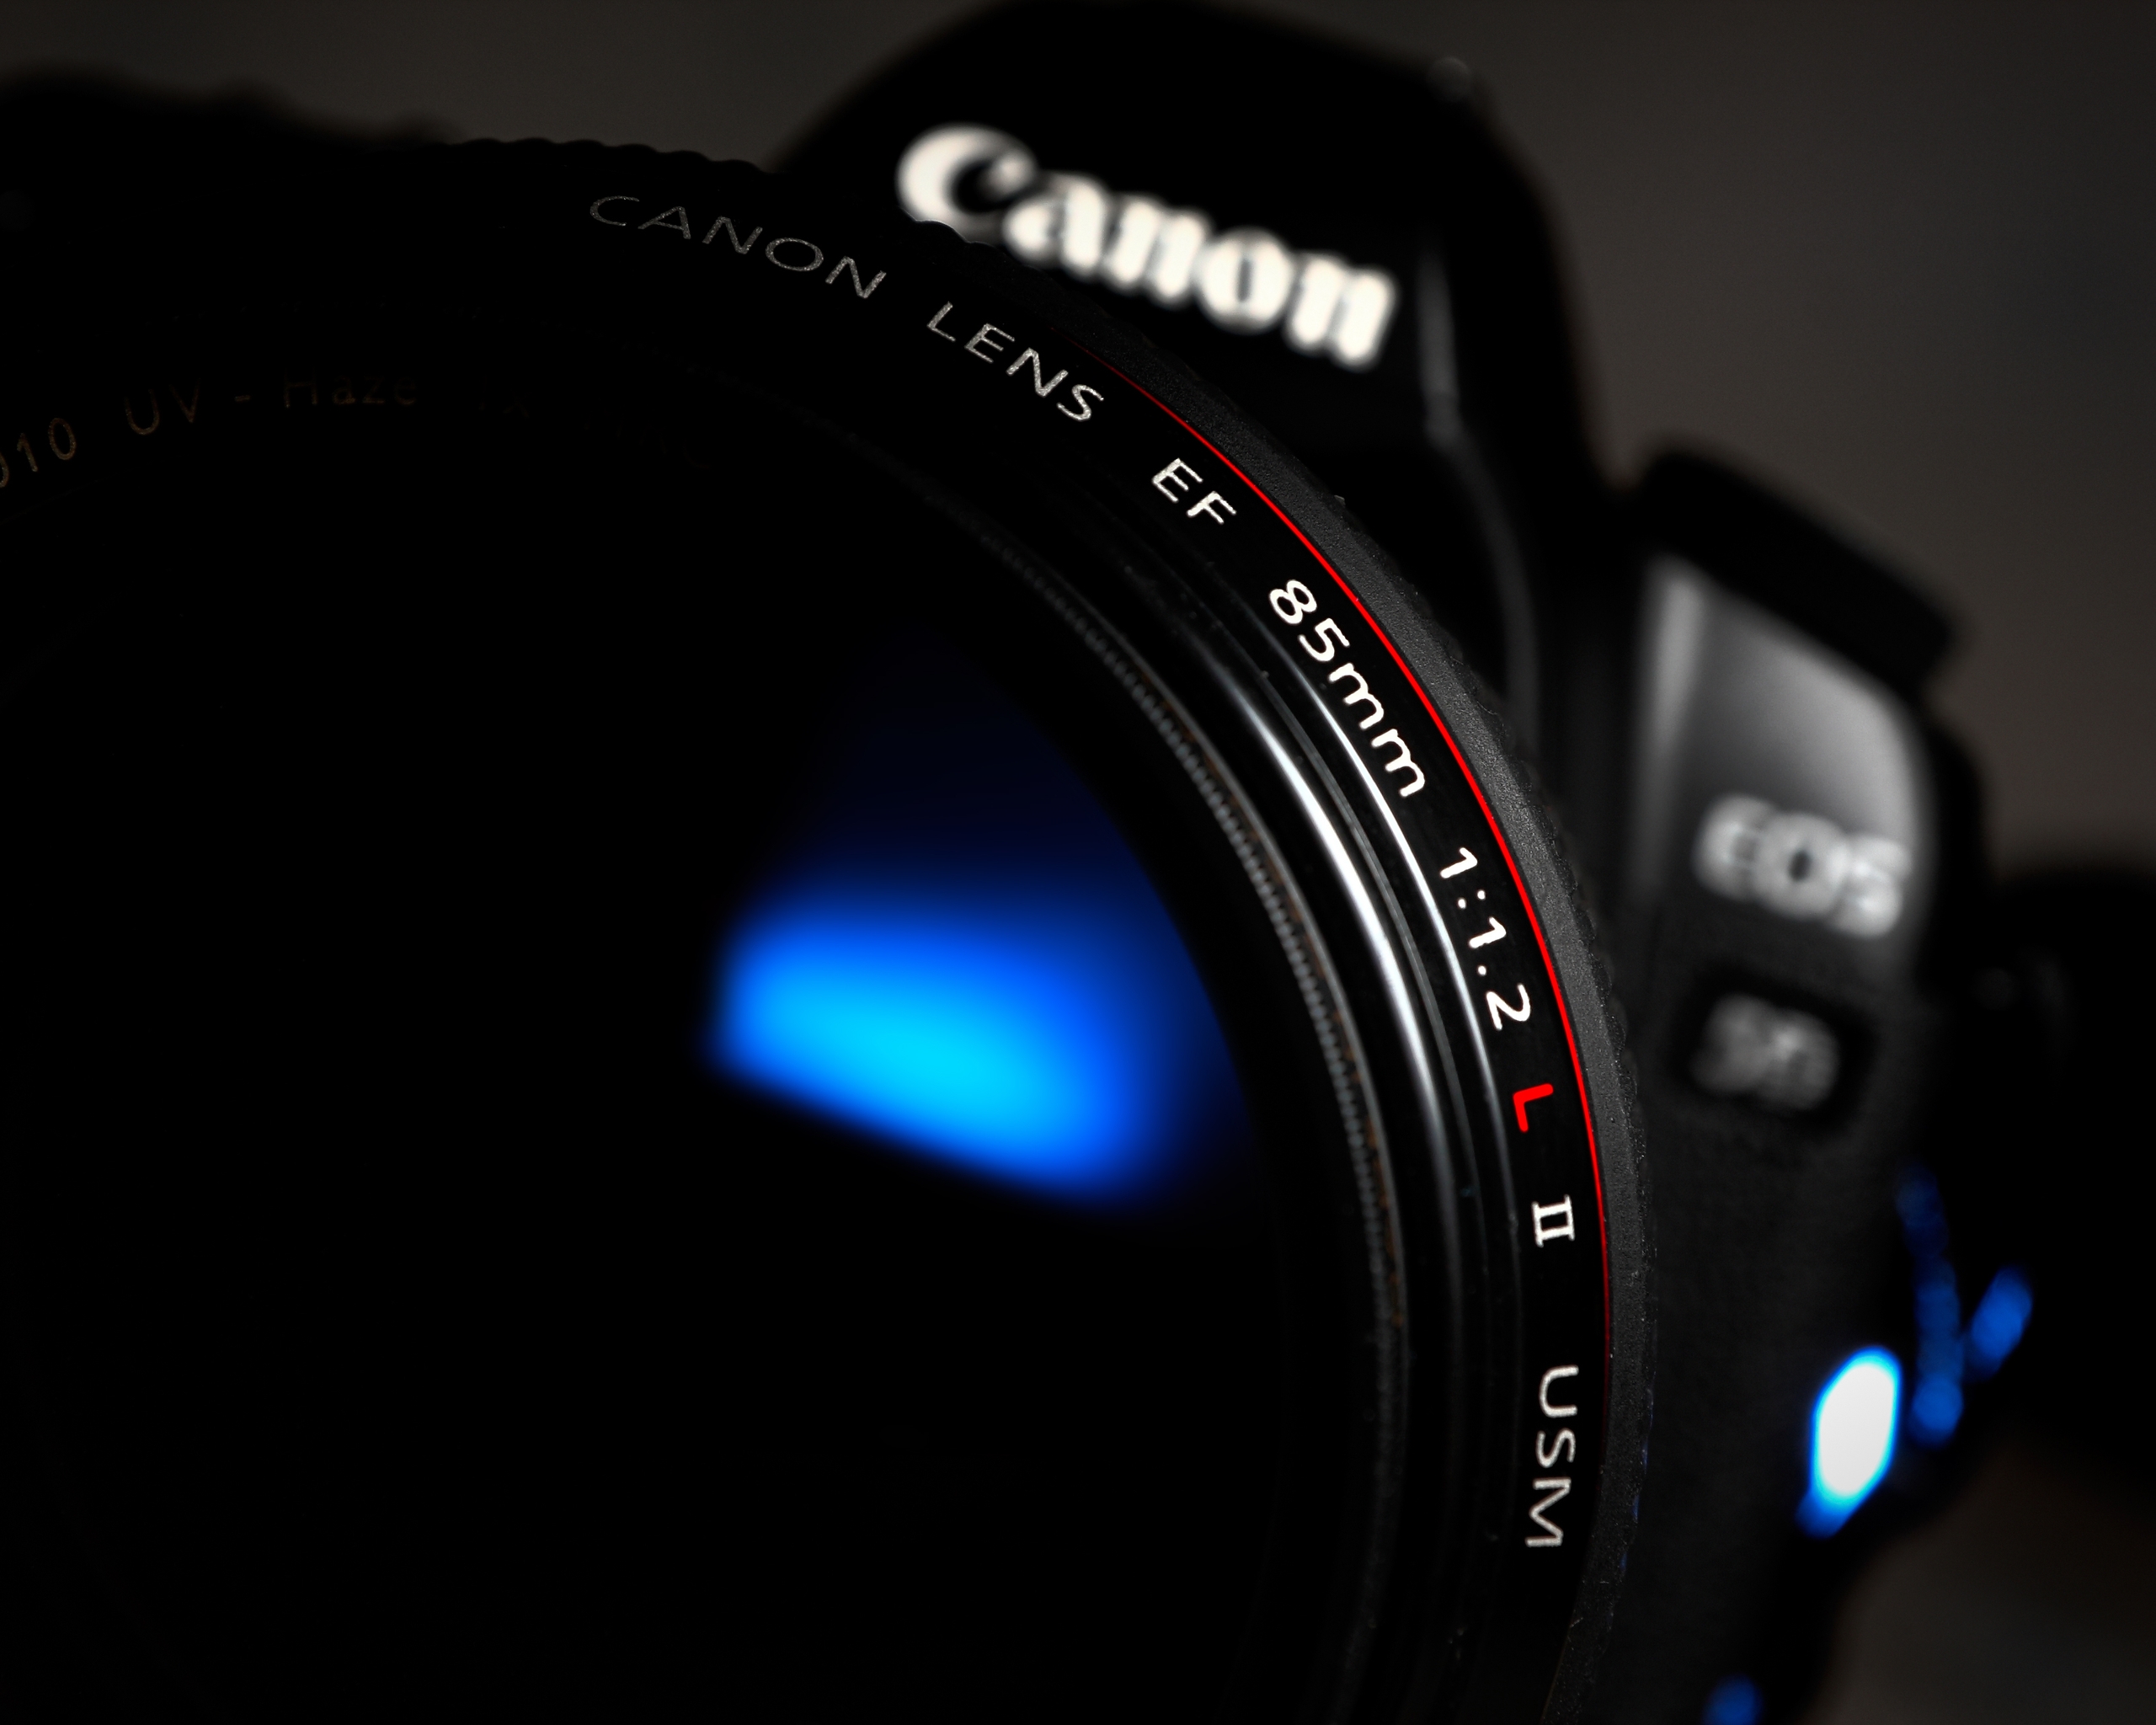 Image: Camera, Canon, lens, camera, macro